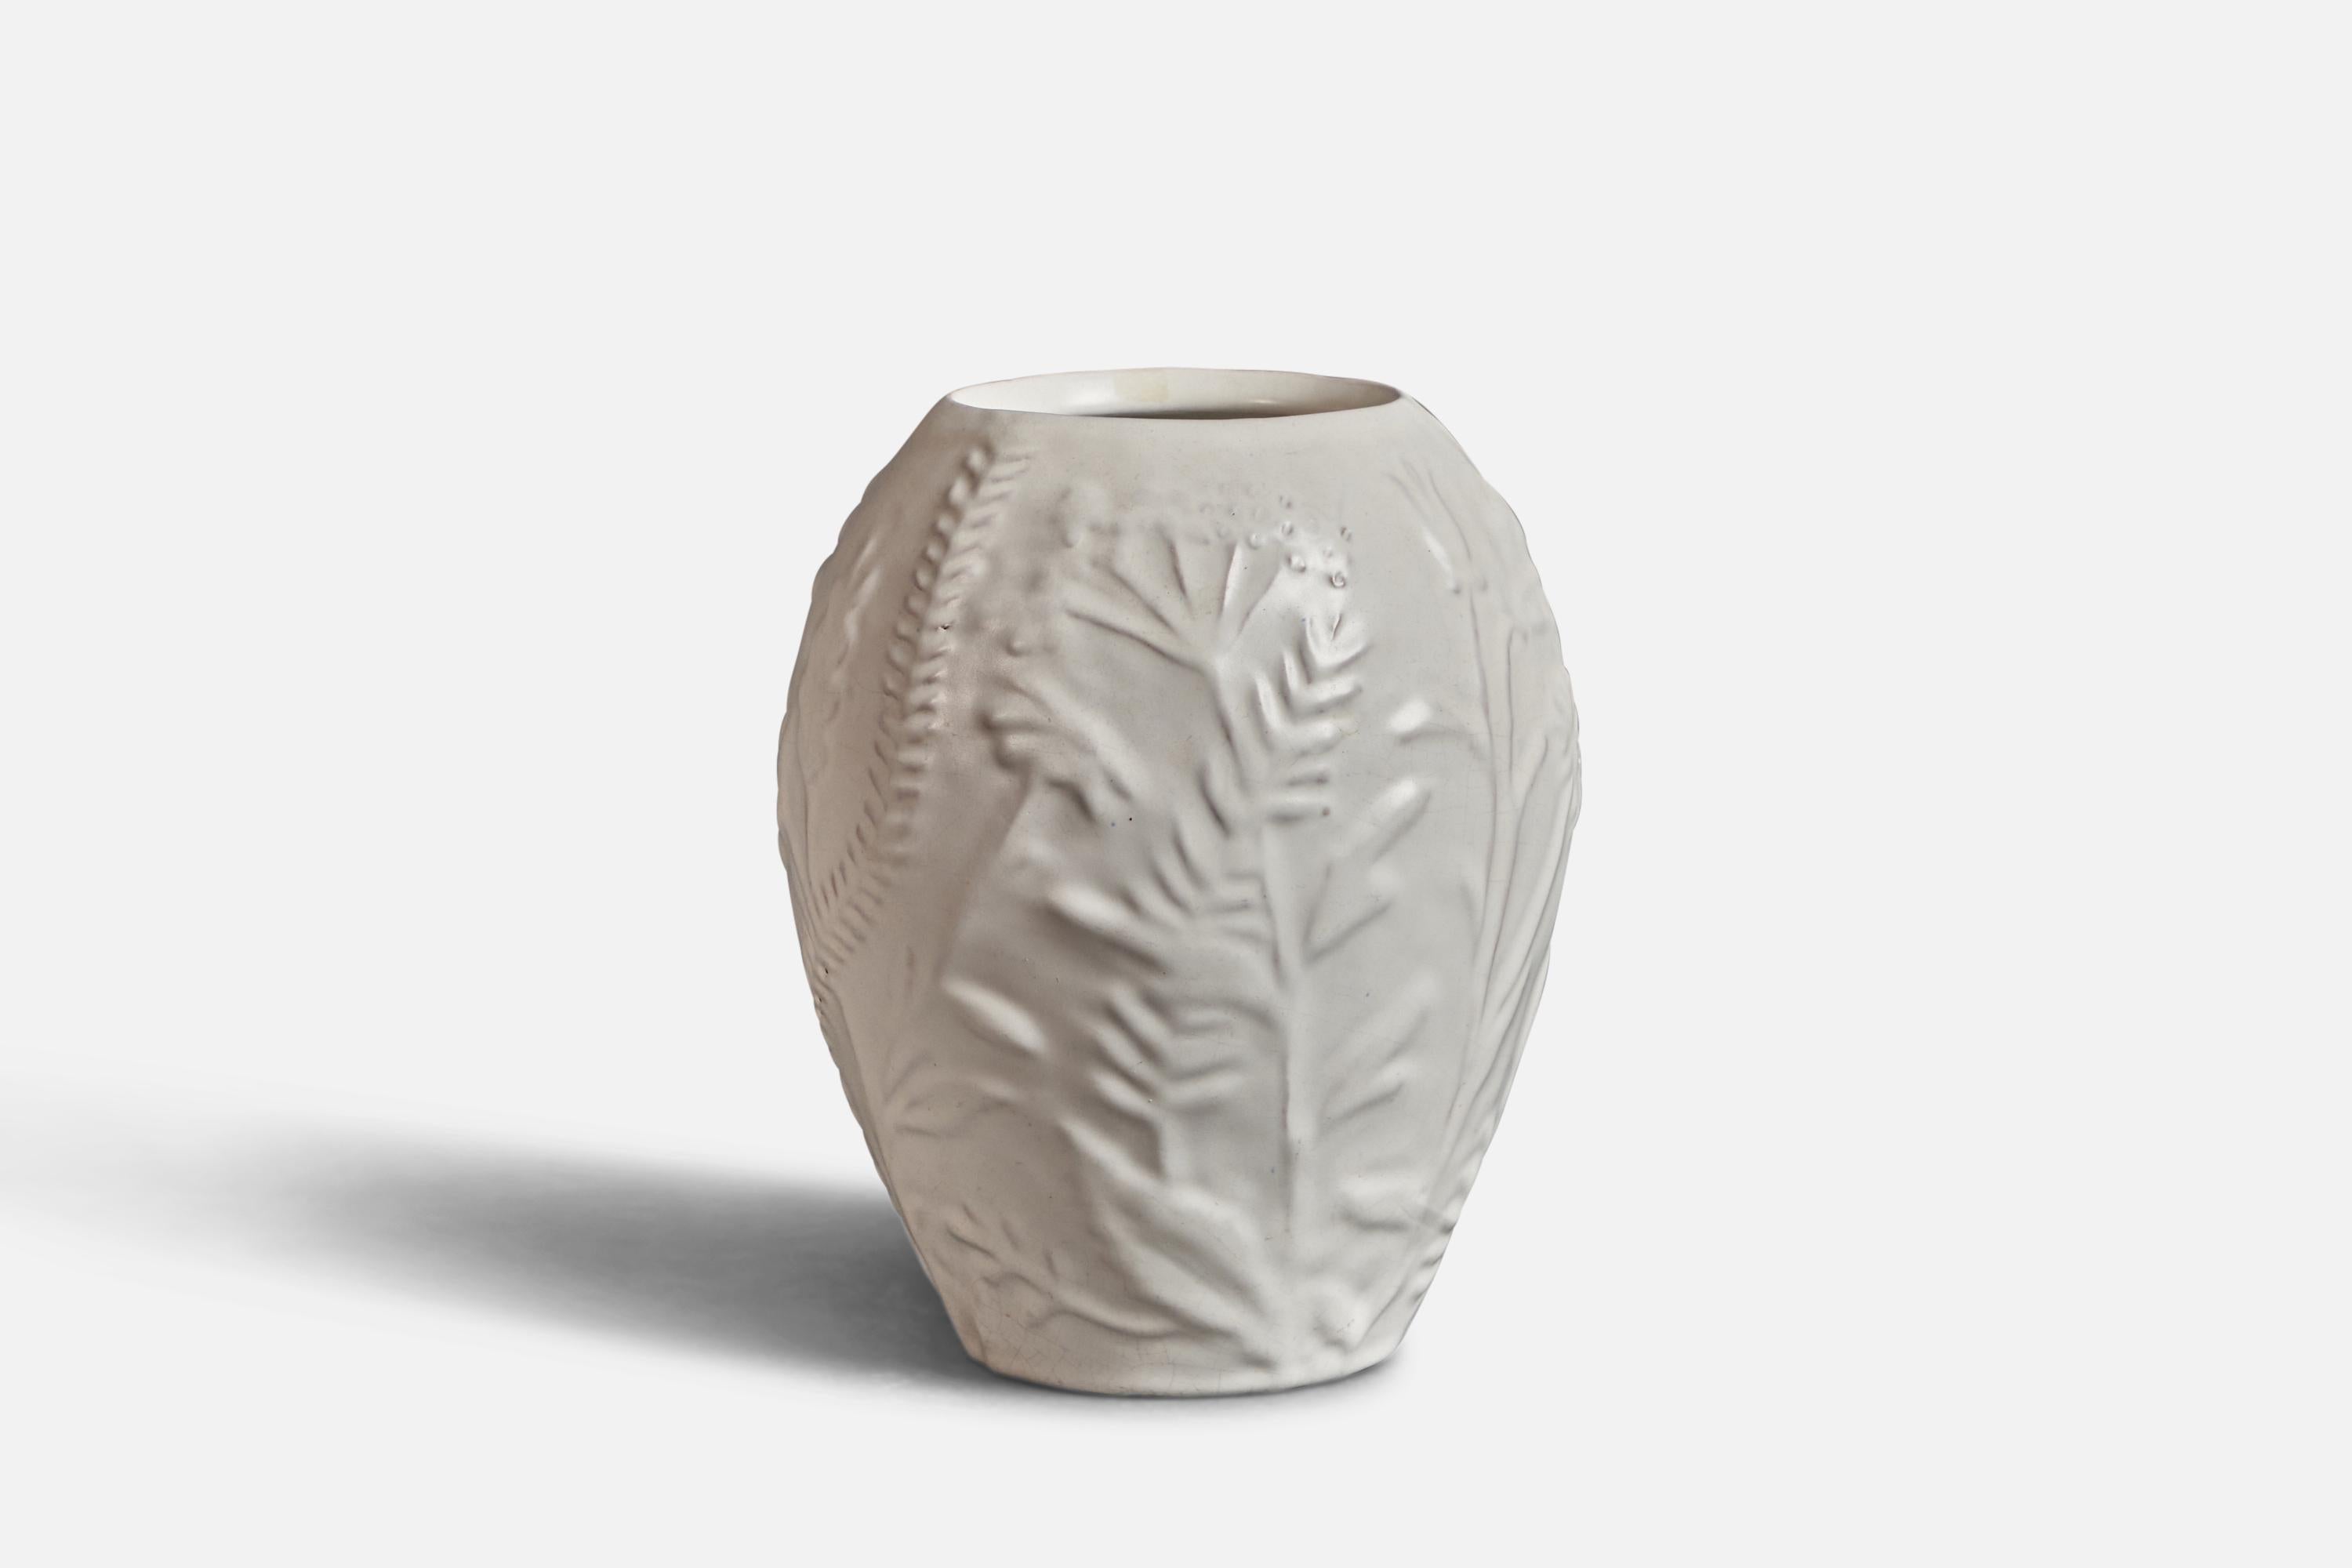 A white-glazed earthenware vase, designed and produced by Nittsjö, Sweden, c. 1930s.